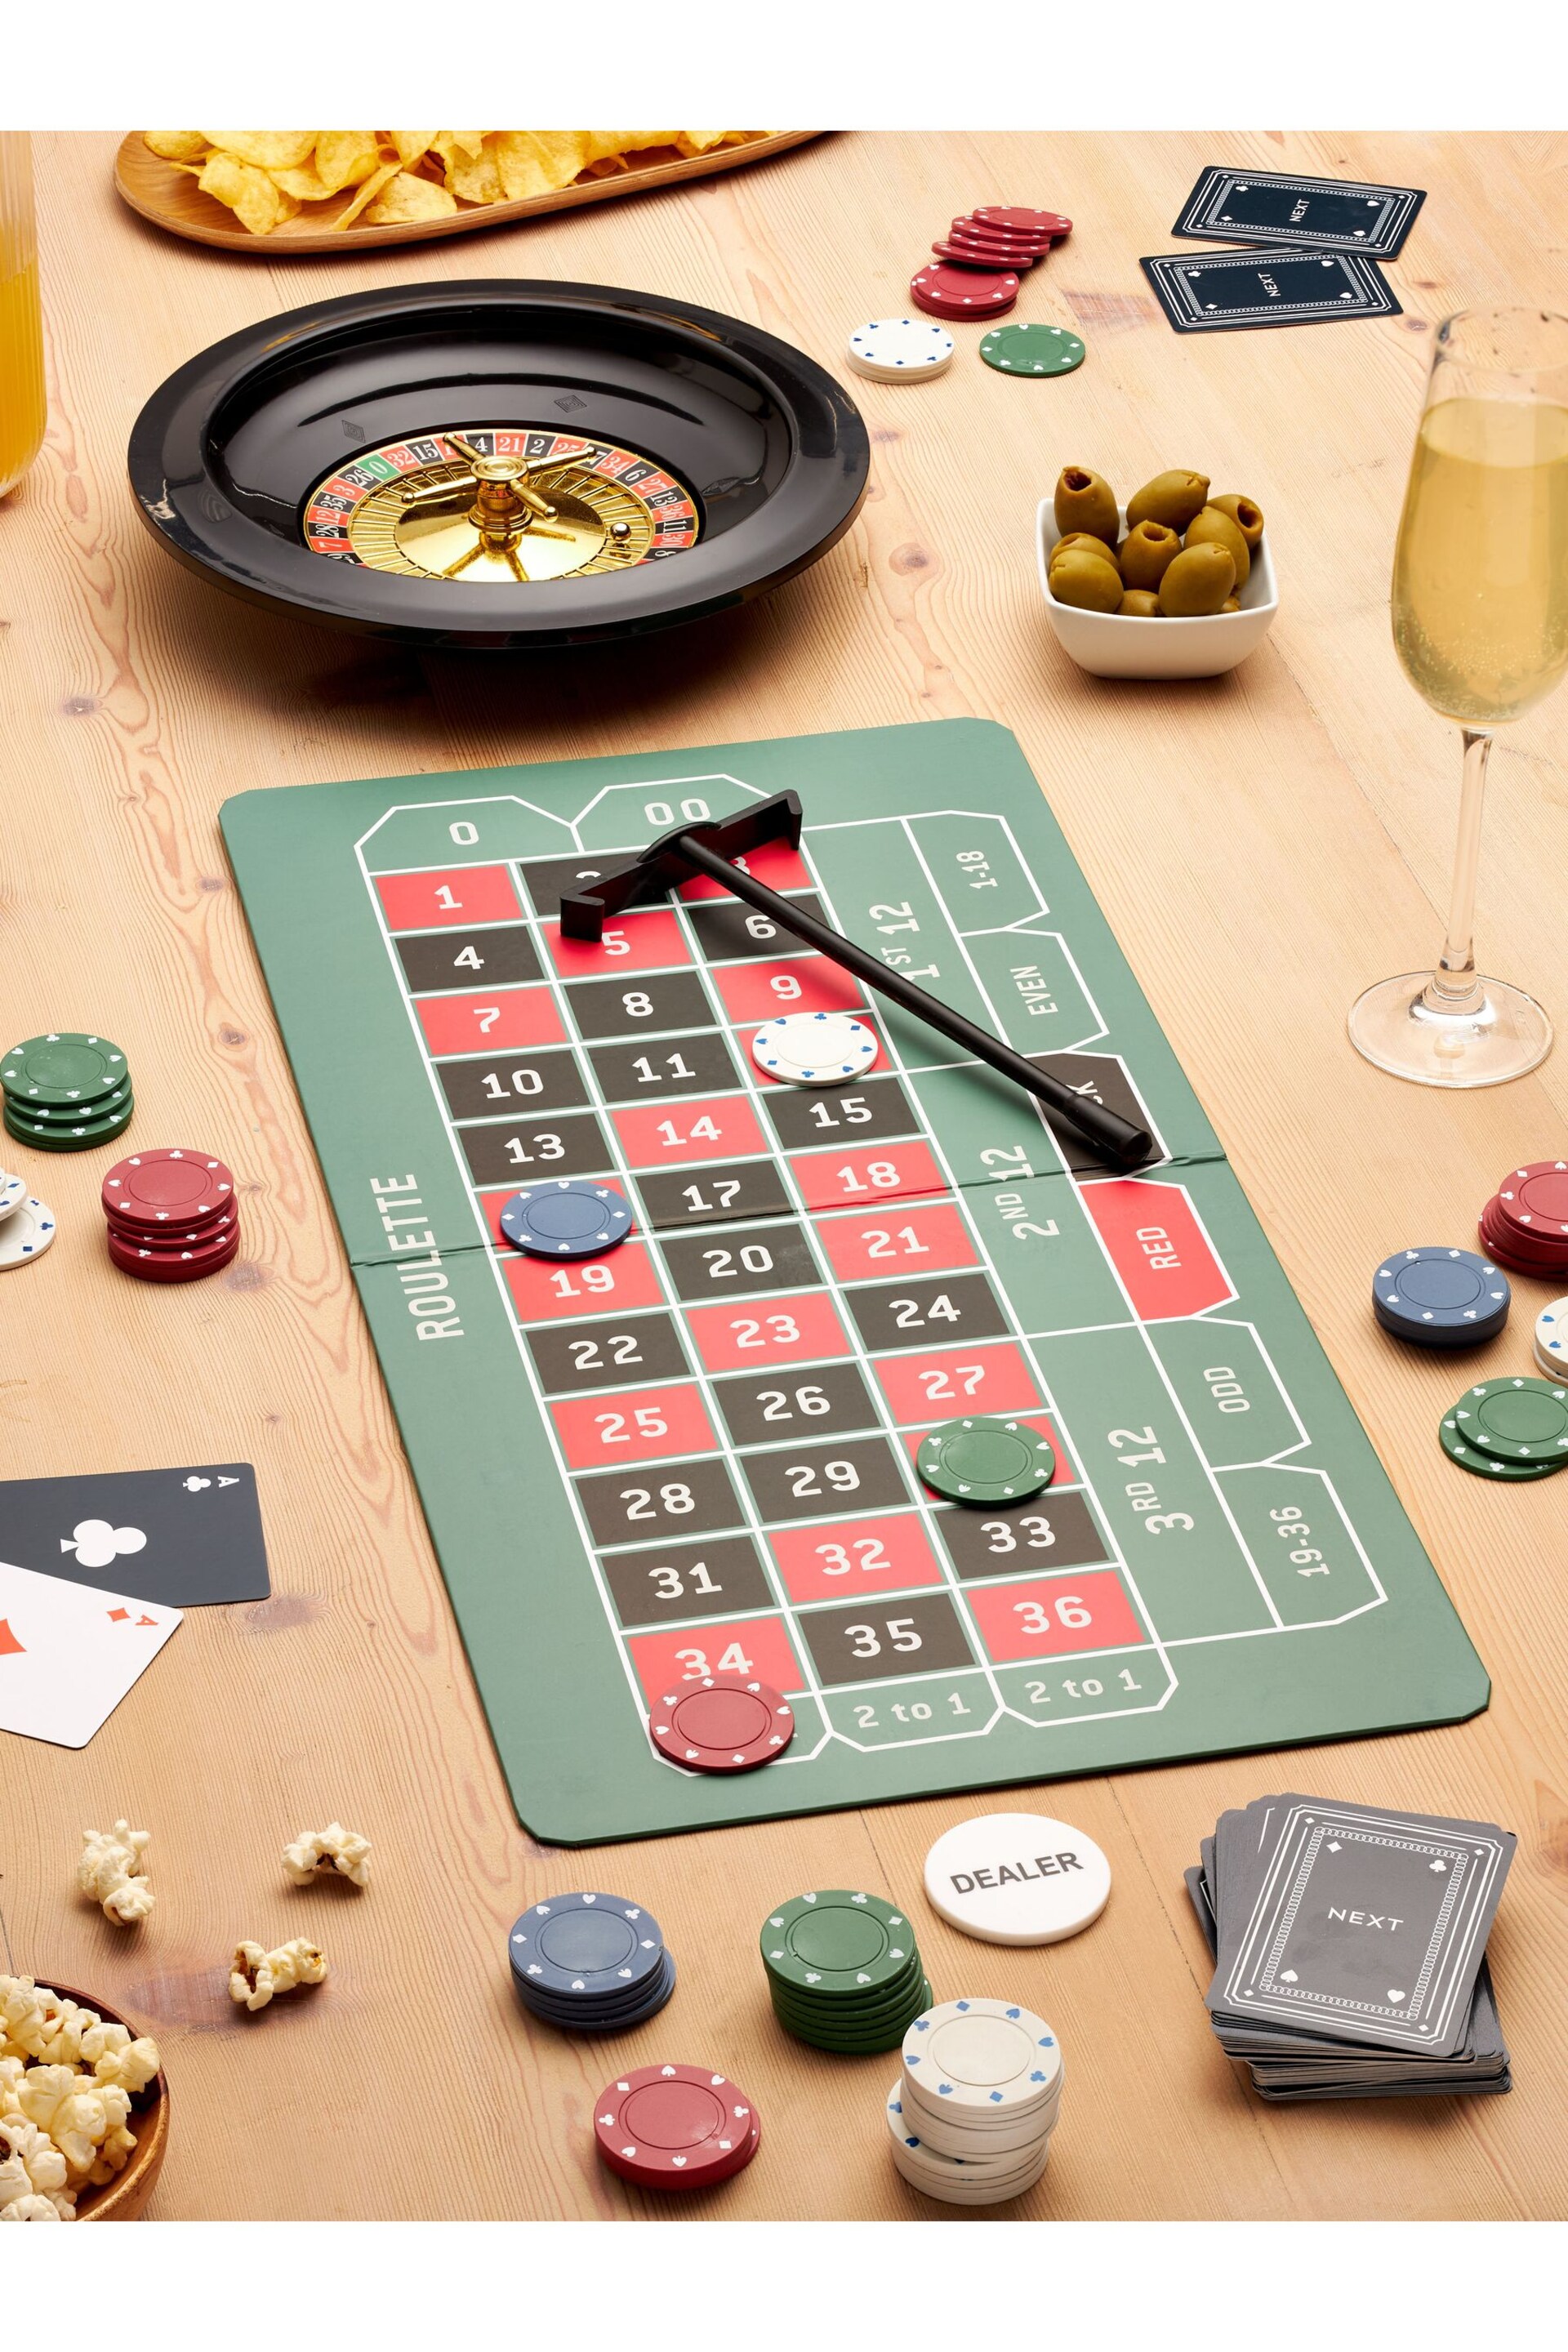 Multi Casino Night Game - Image 1 of 6